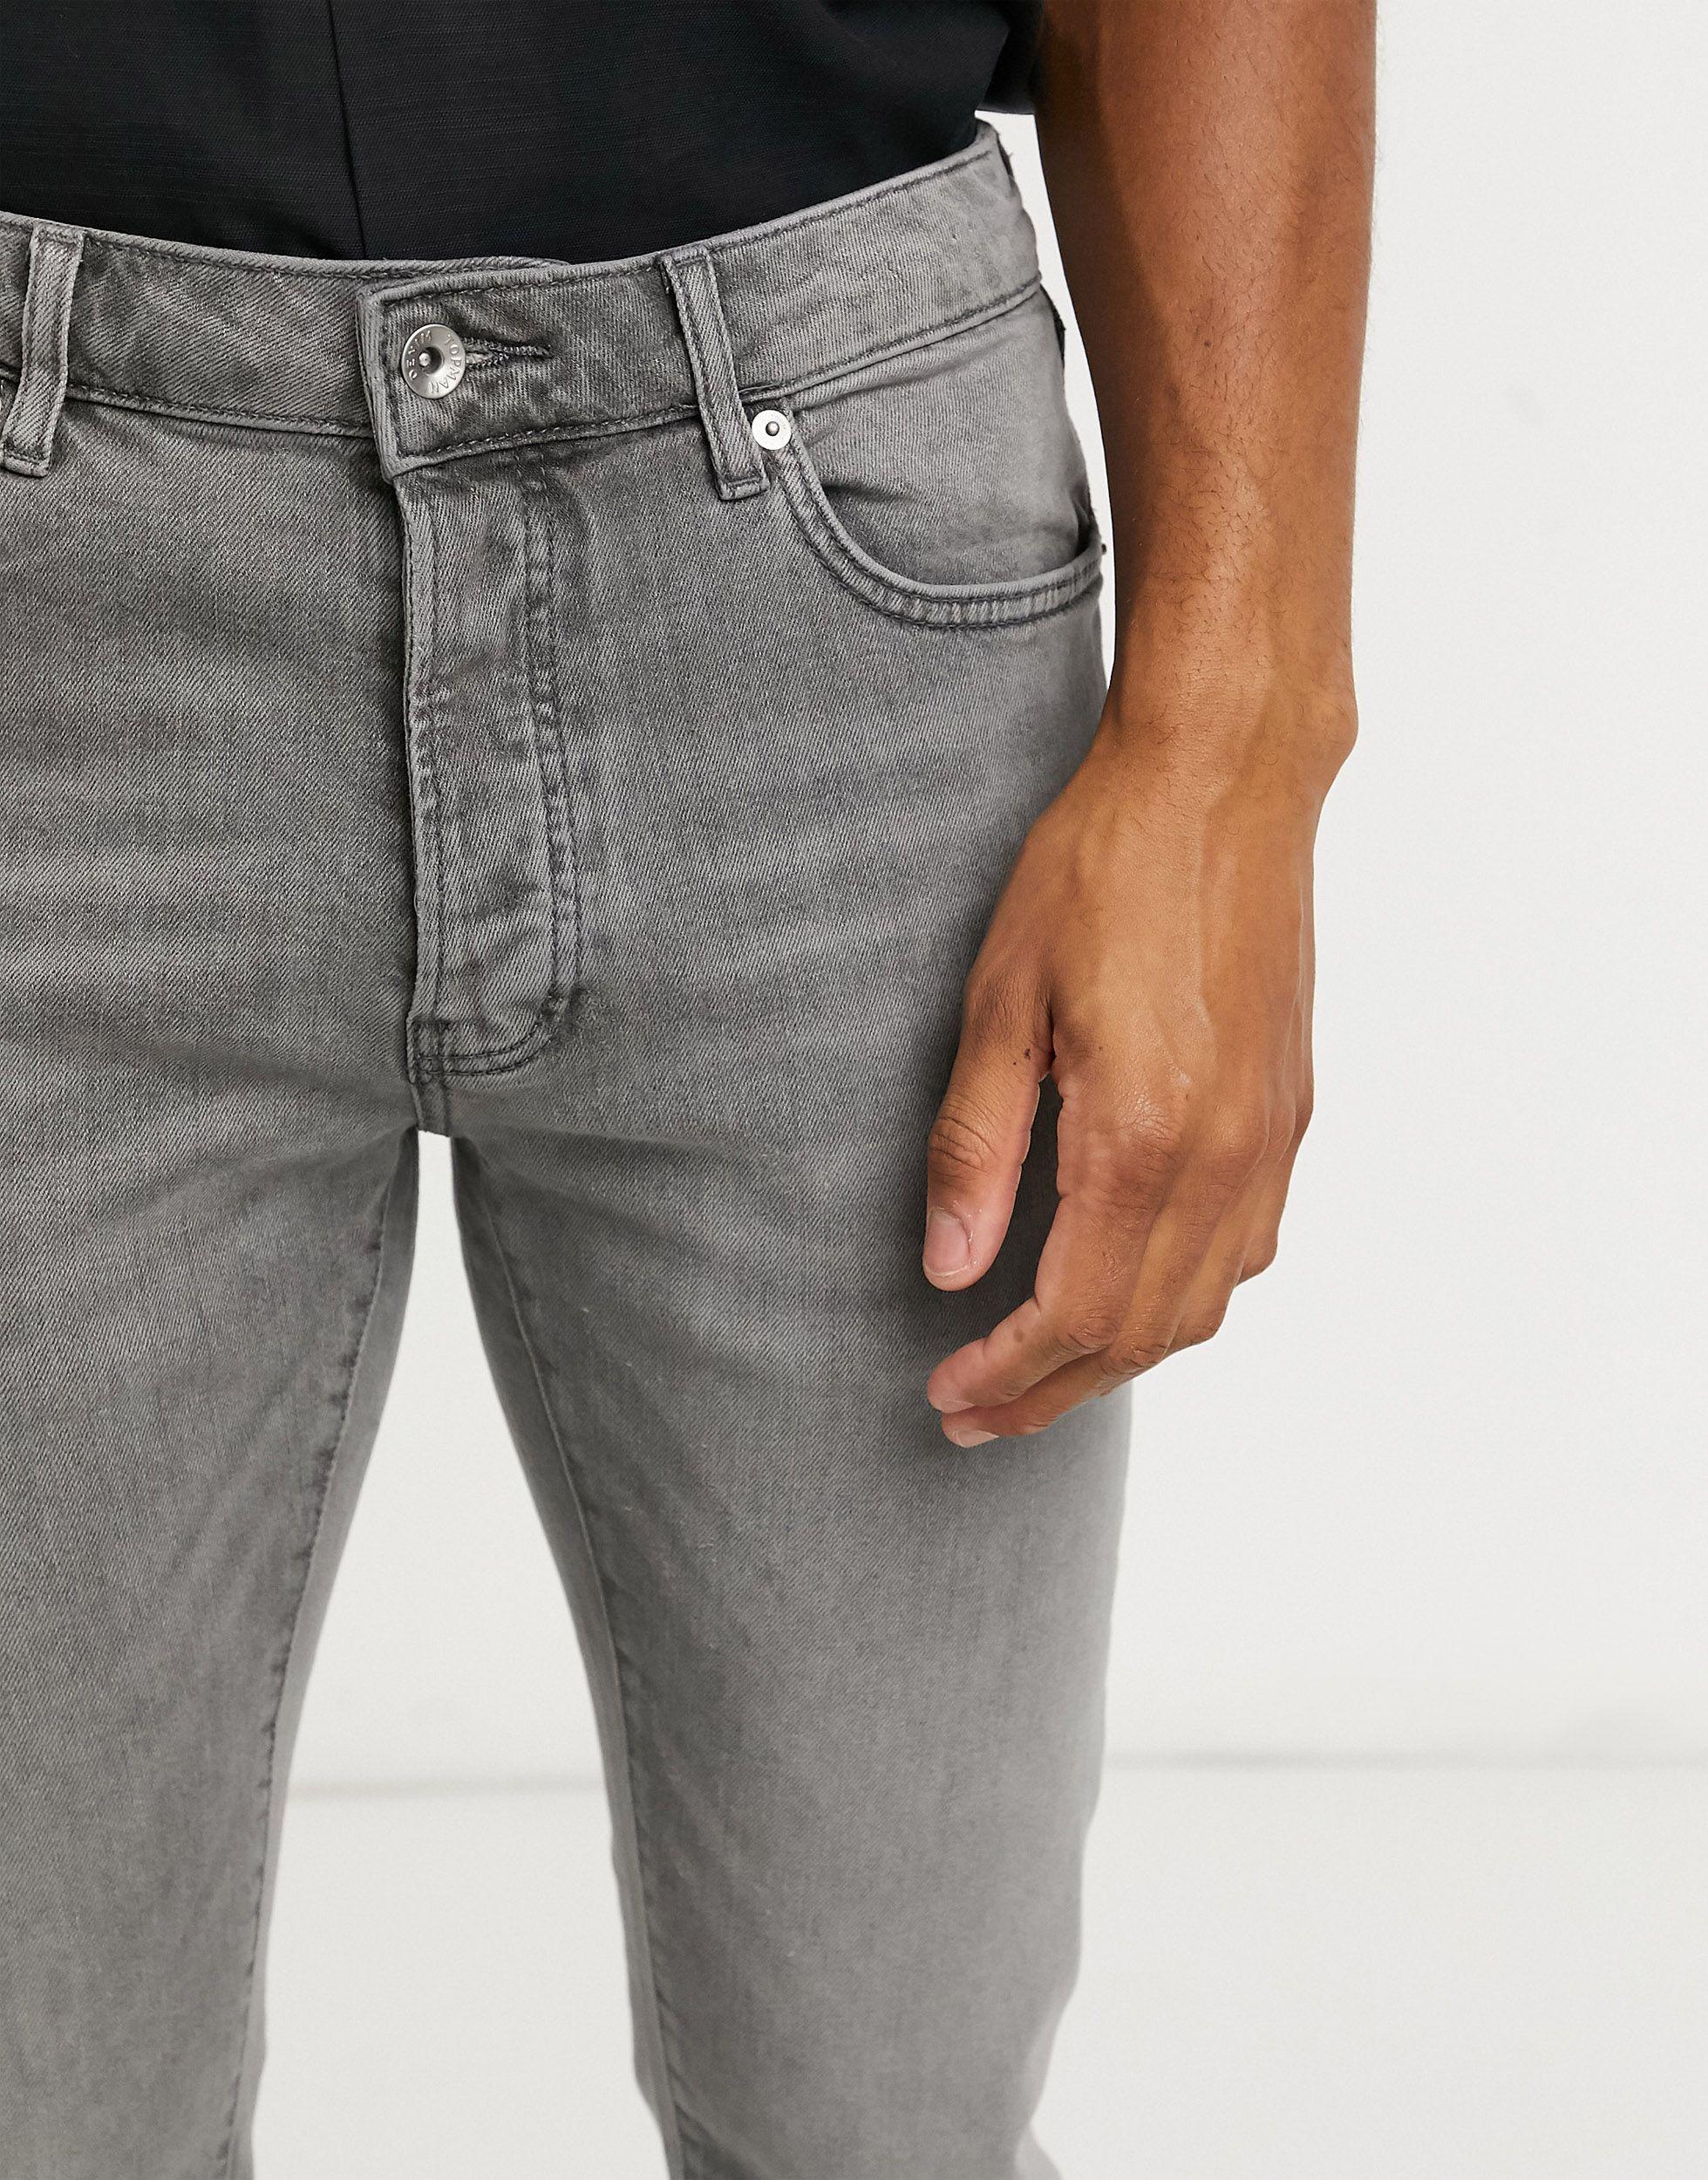 TOPMAN Denim Slim Jeans in Gray for Men - Lyst